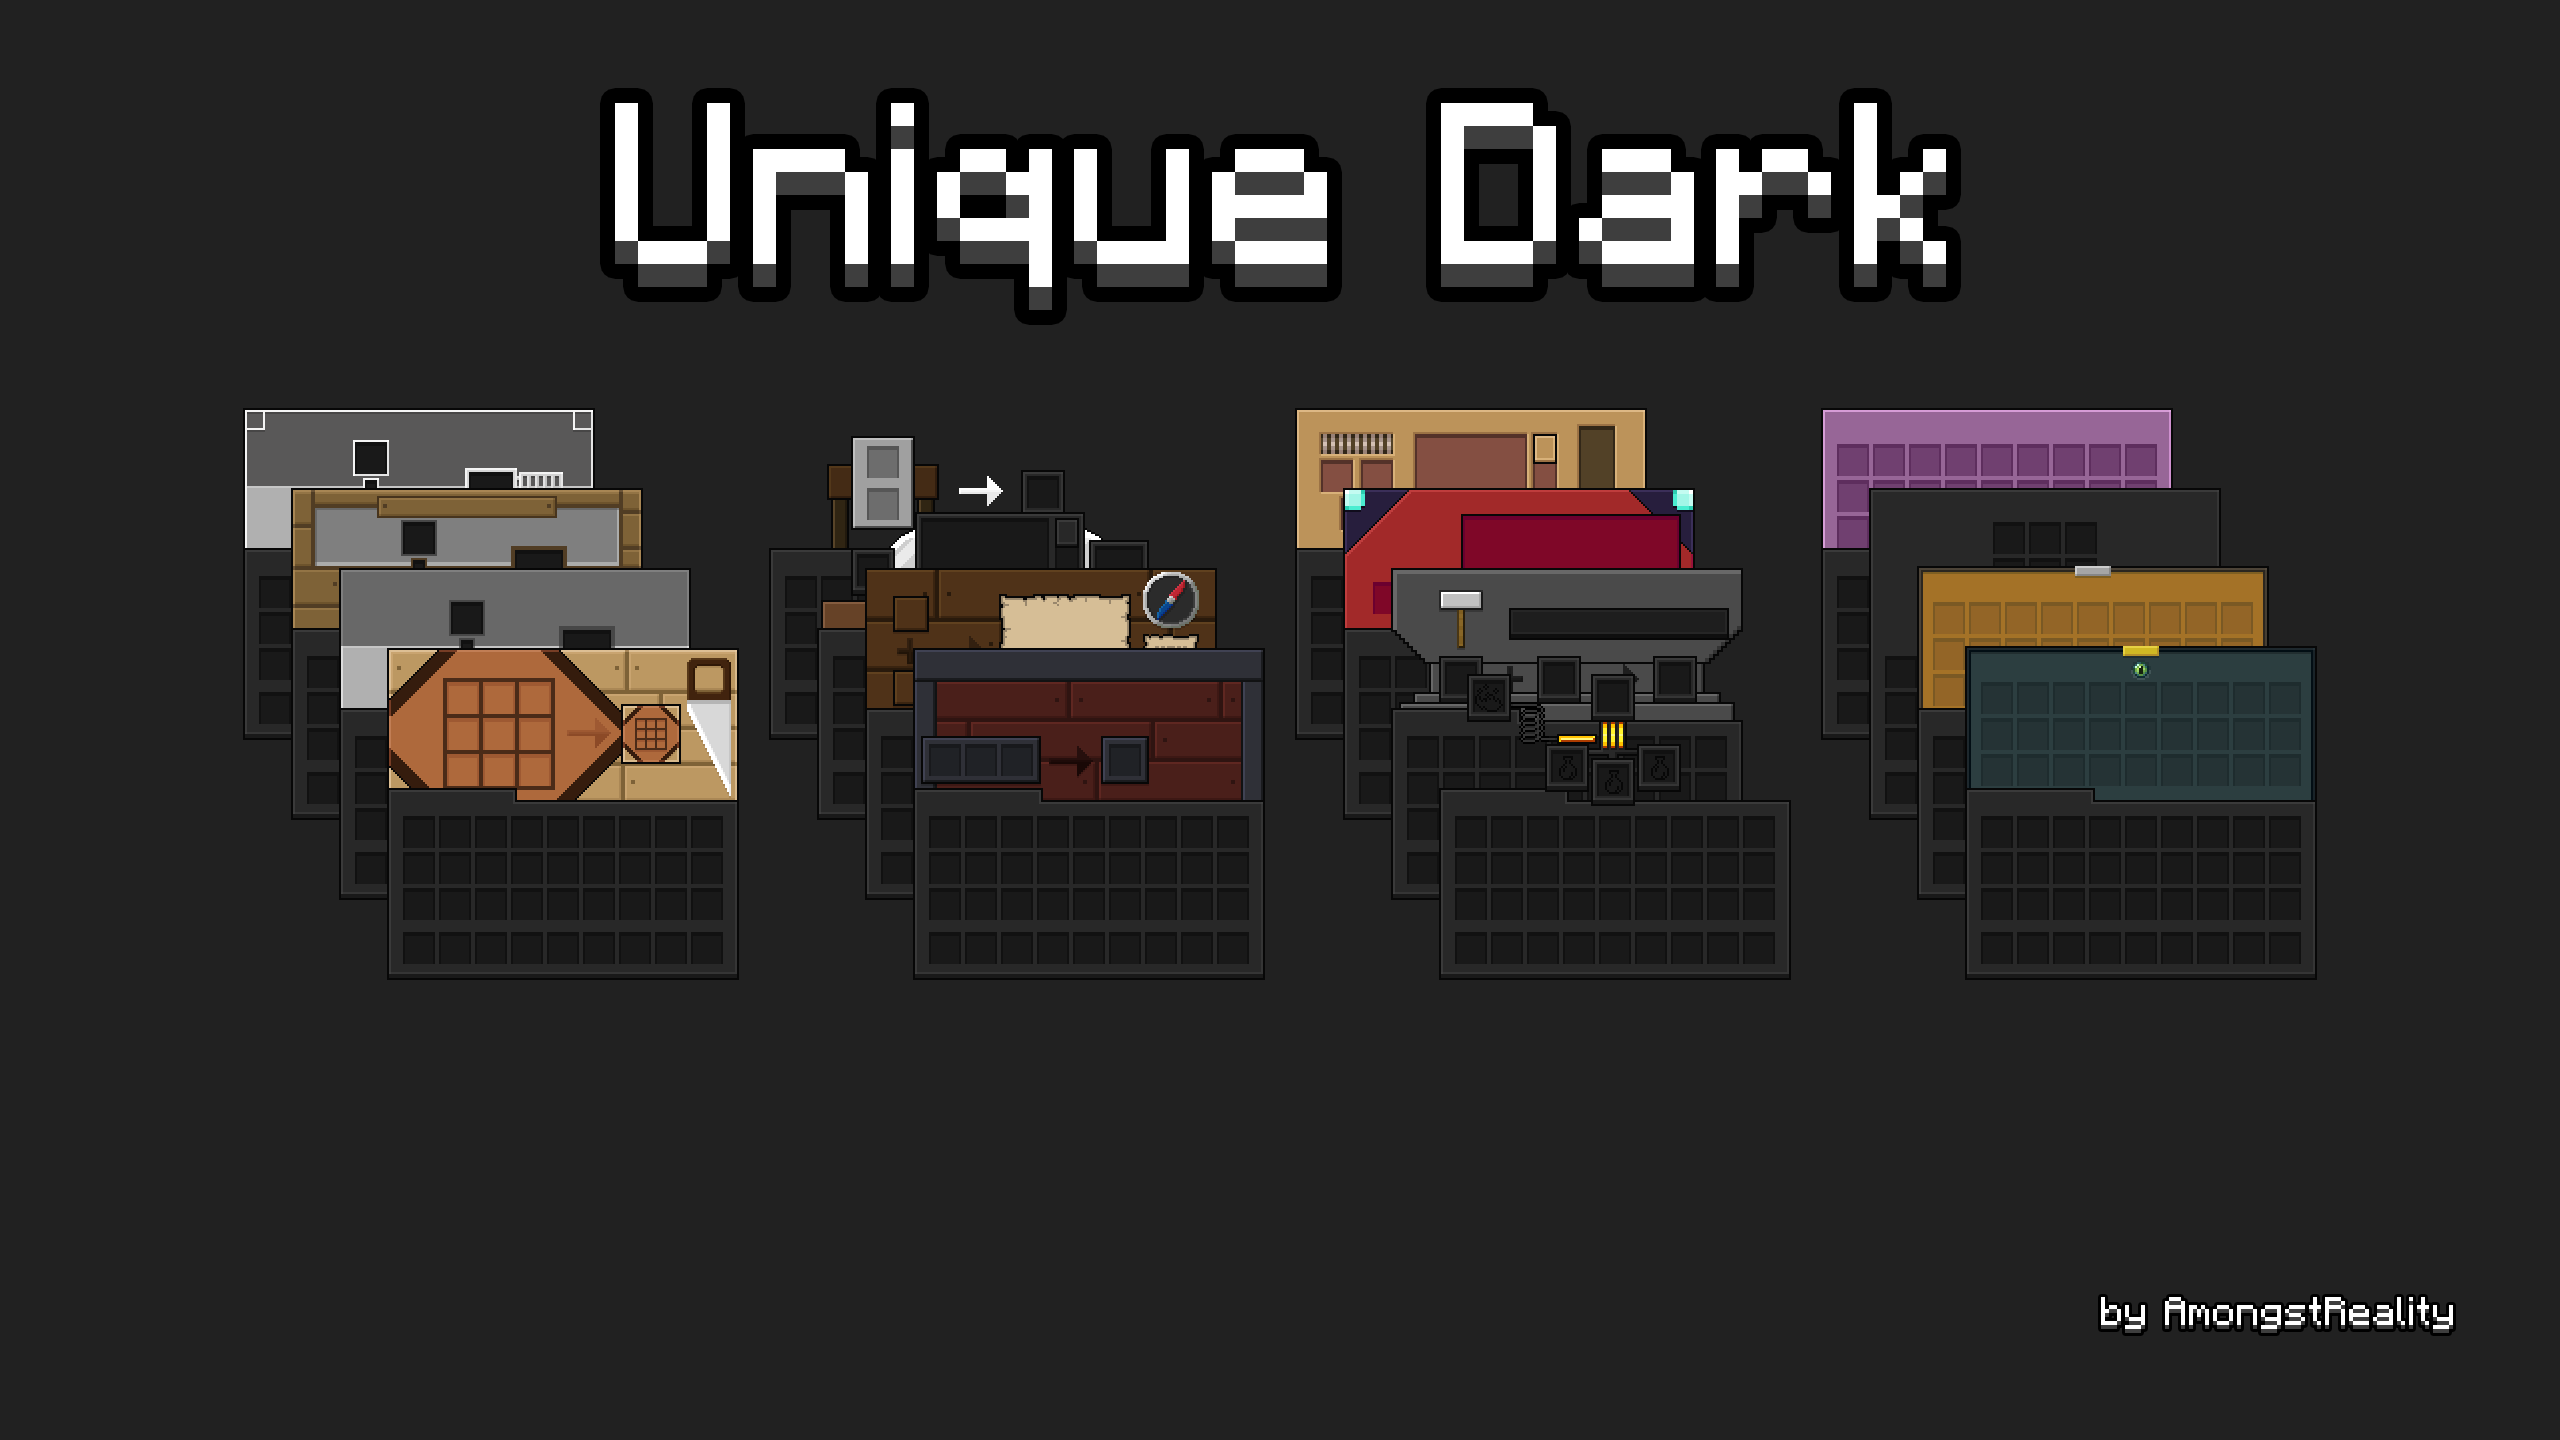 Unique Dark screenshot 1